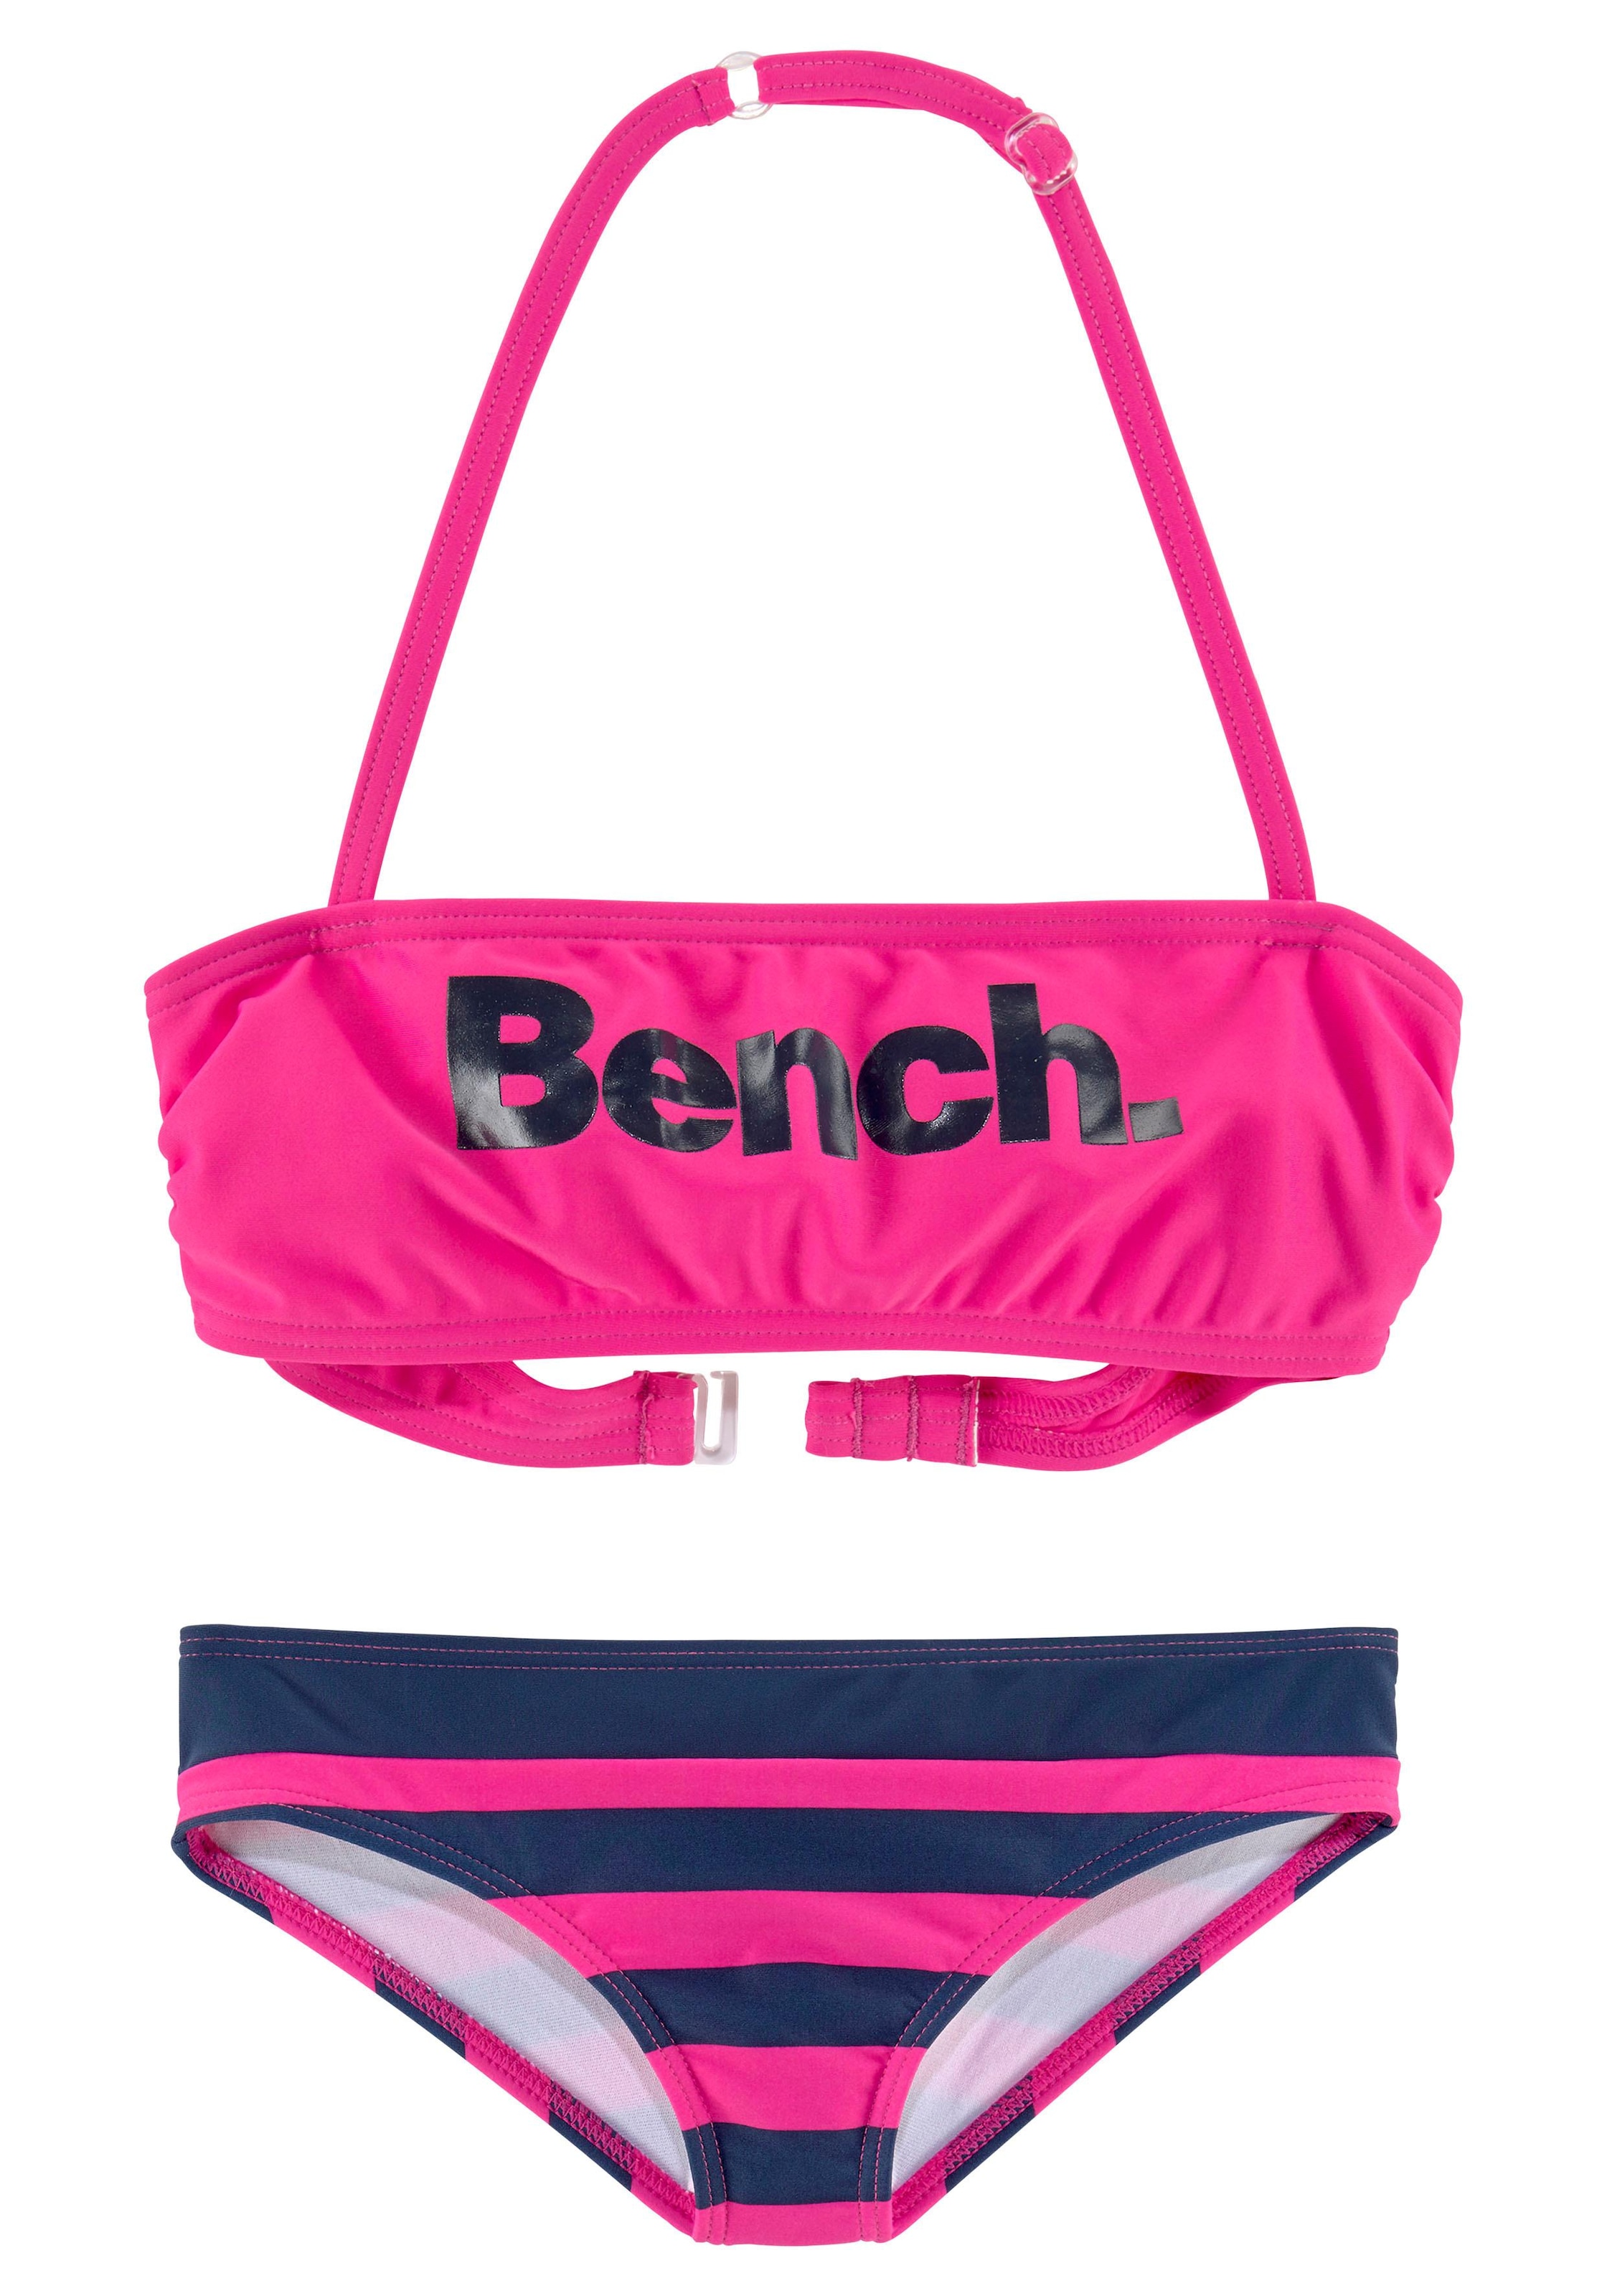 Bench. im kaufen Bandeau-Bikini, mit Logoprint großem Online-Shop